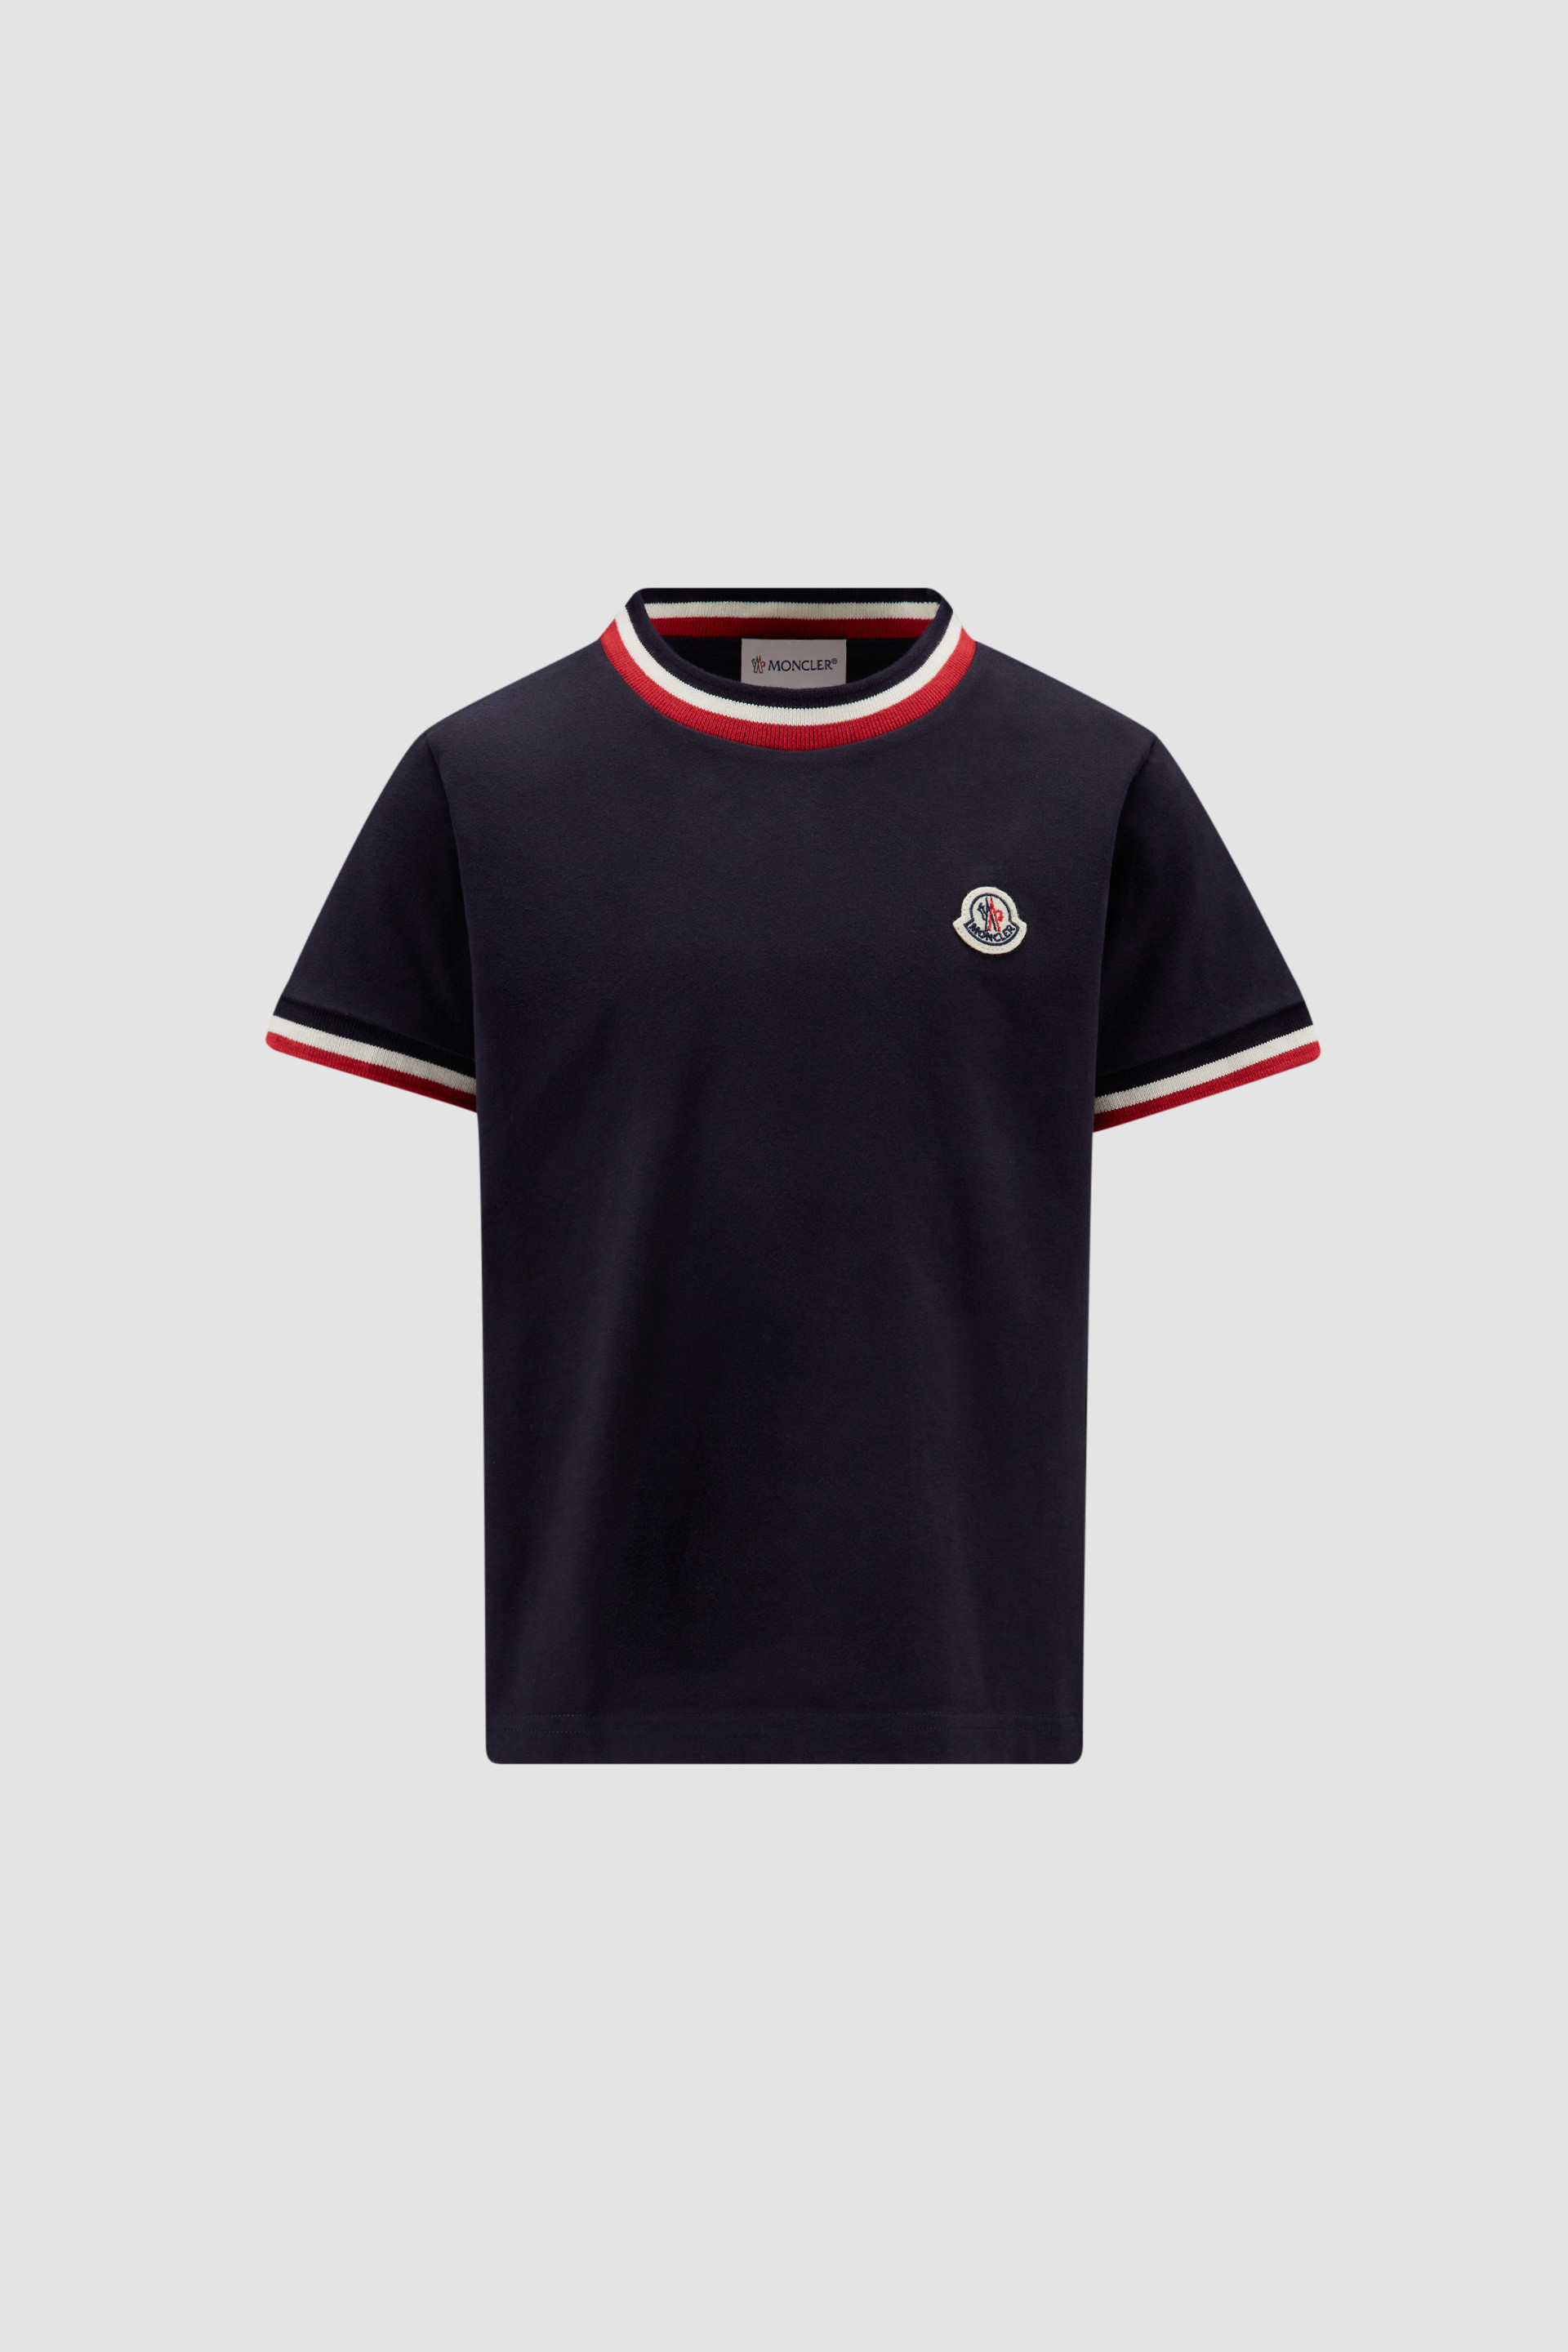 T-Shirts, Polos & Long Shirts for Boys | Moncler